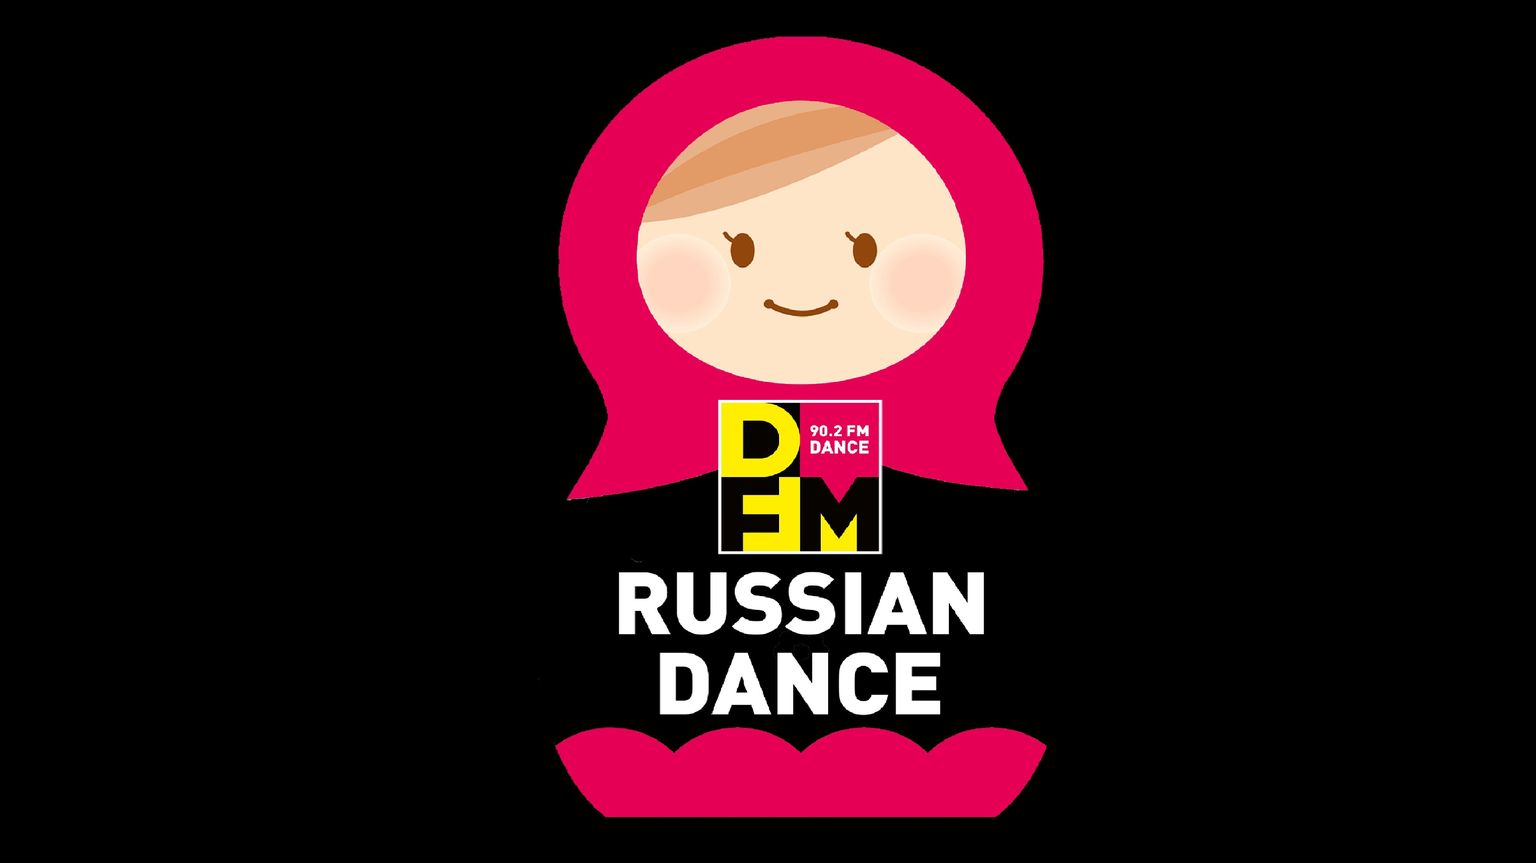 Ди фм рашен радио. DFM Russian Dance. Радио DFM рашен дэнс.